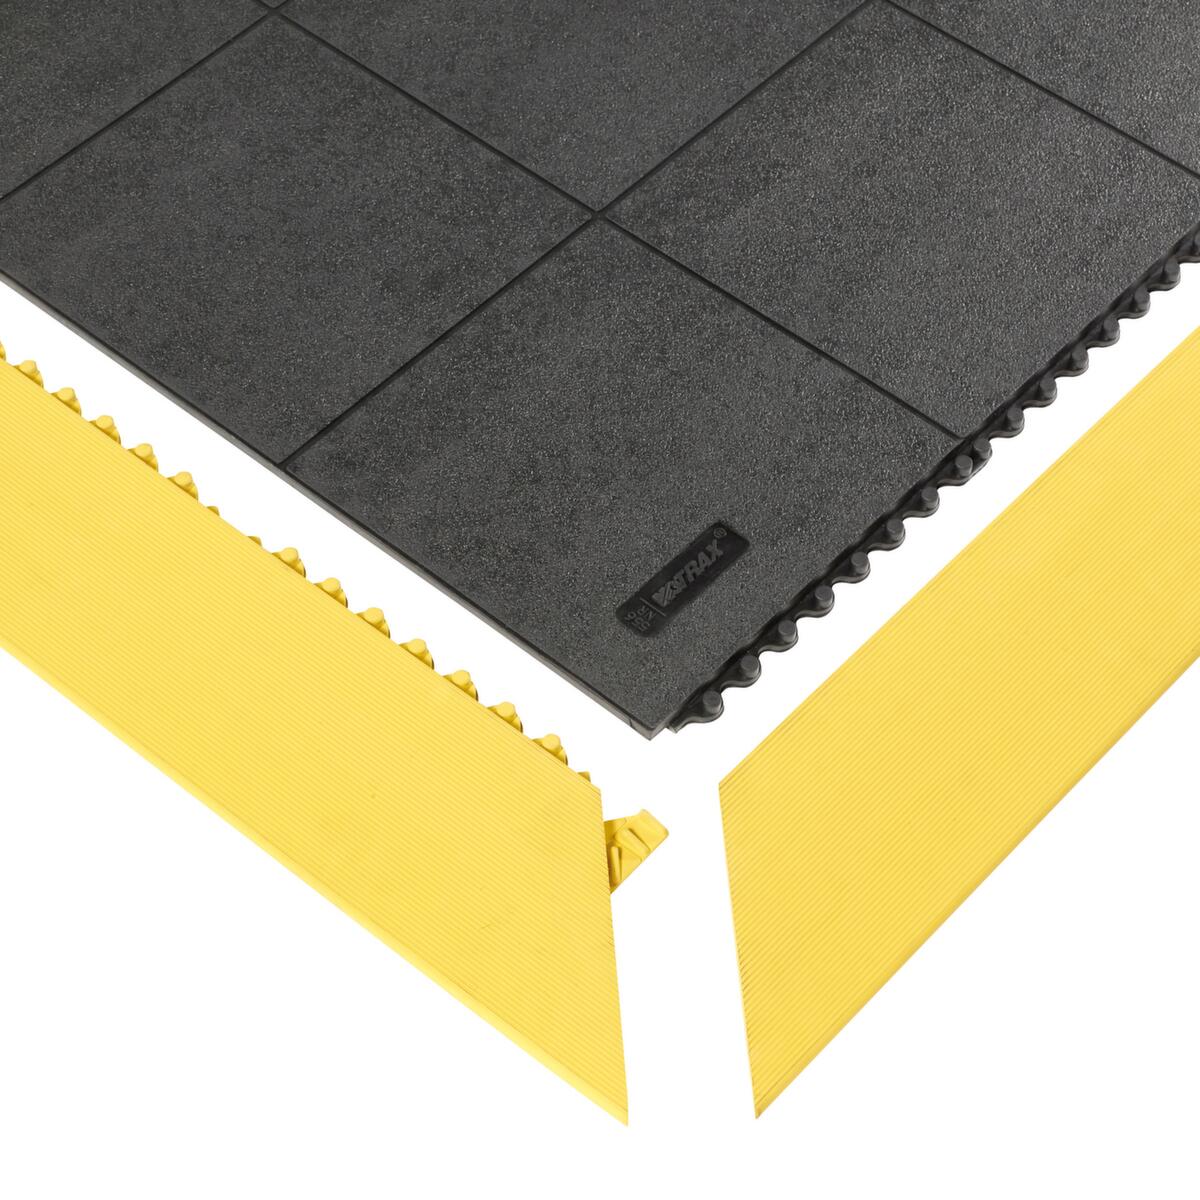 baguette de finition de bordure Herenveen pour tapis antifatigue, jaune  ZOOM